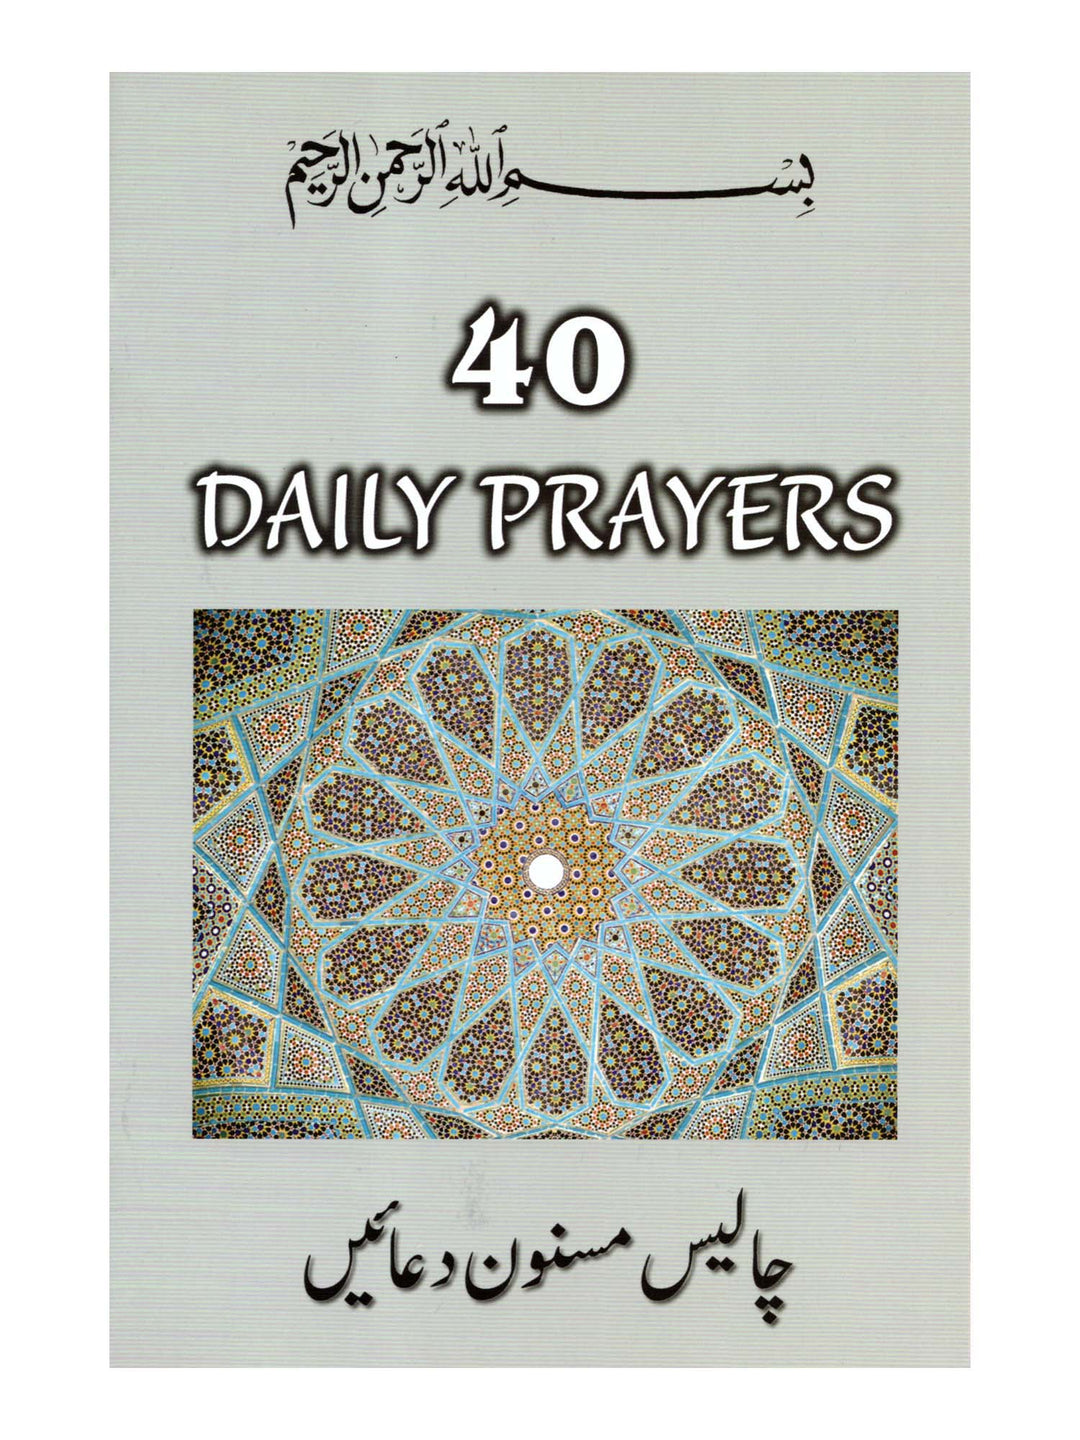 40 Daily Prayers, Arabic, Urdu, English & Transliteration